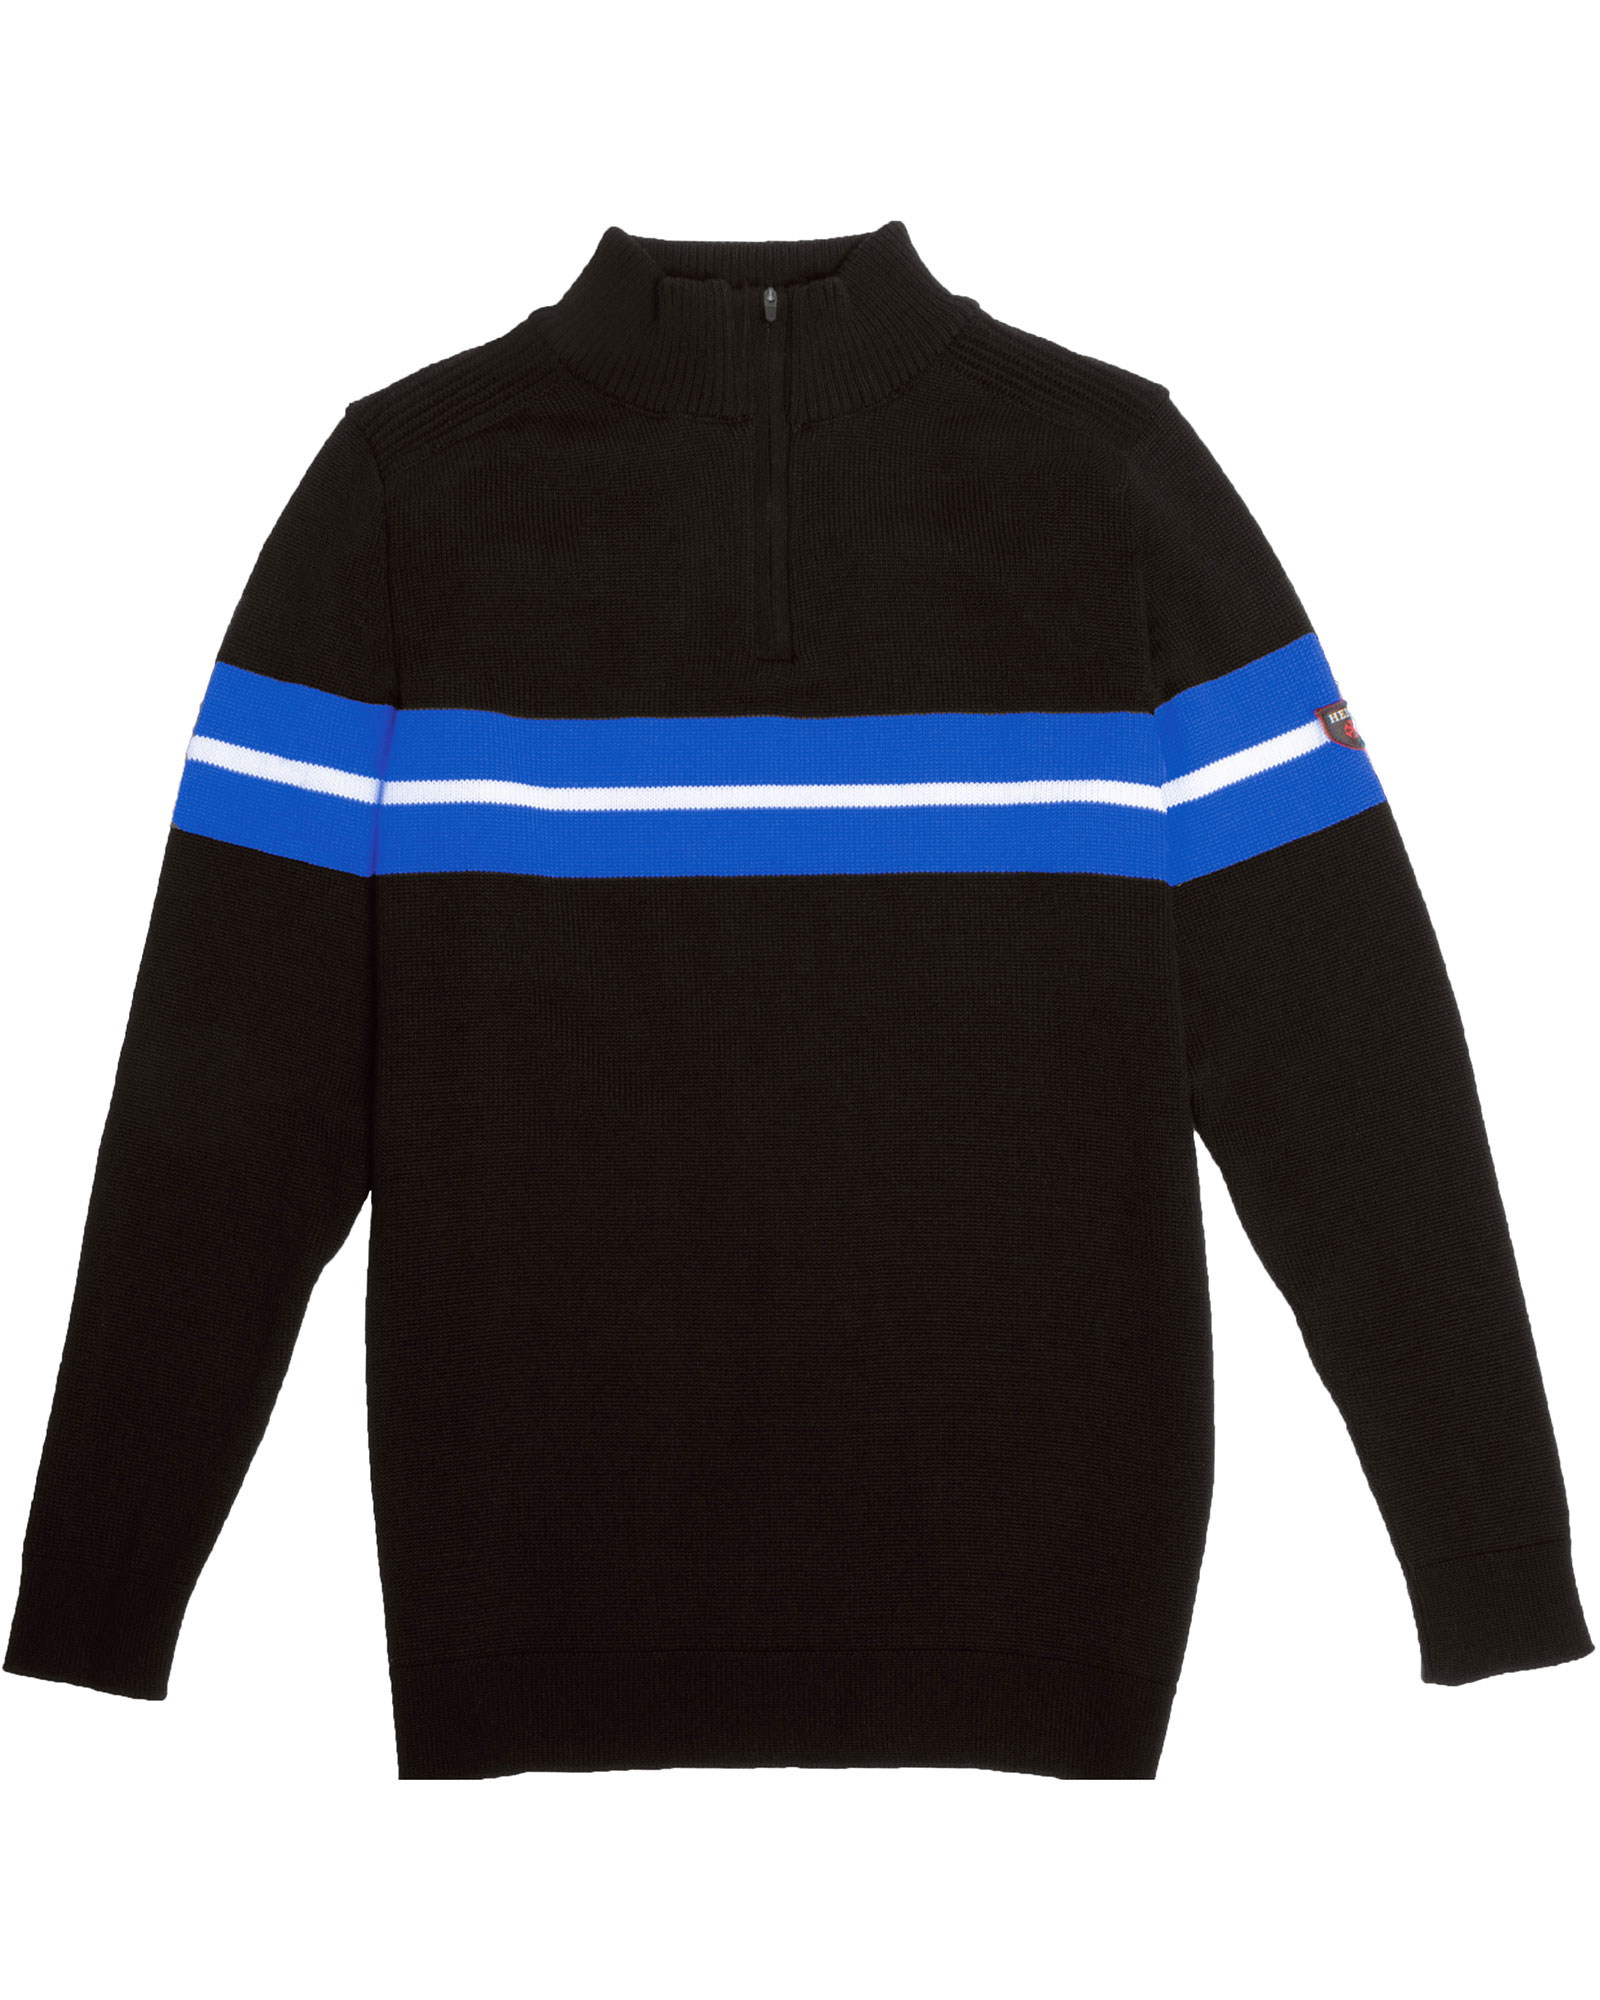 Henjl Carve Half Zip Men’s Merino Sweater - Black/Snow/Bright Blue M